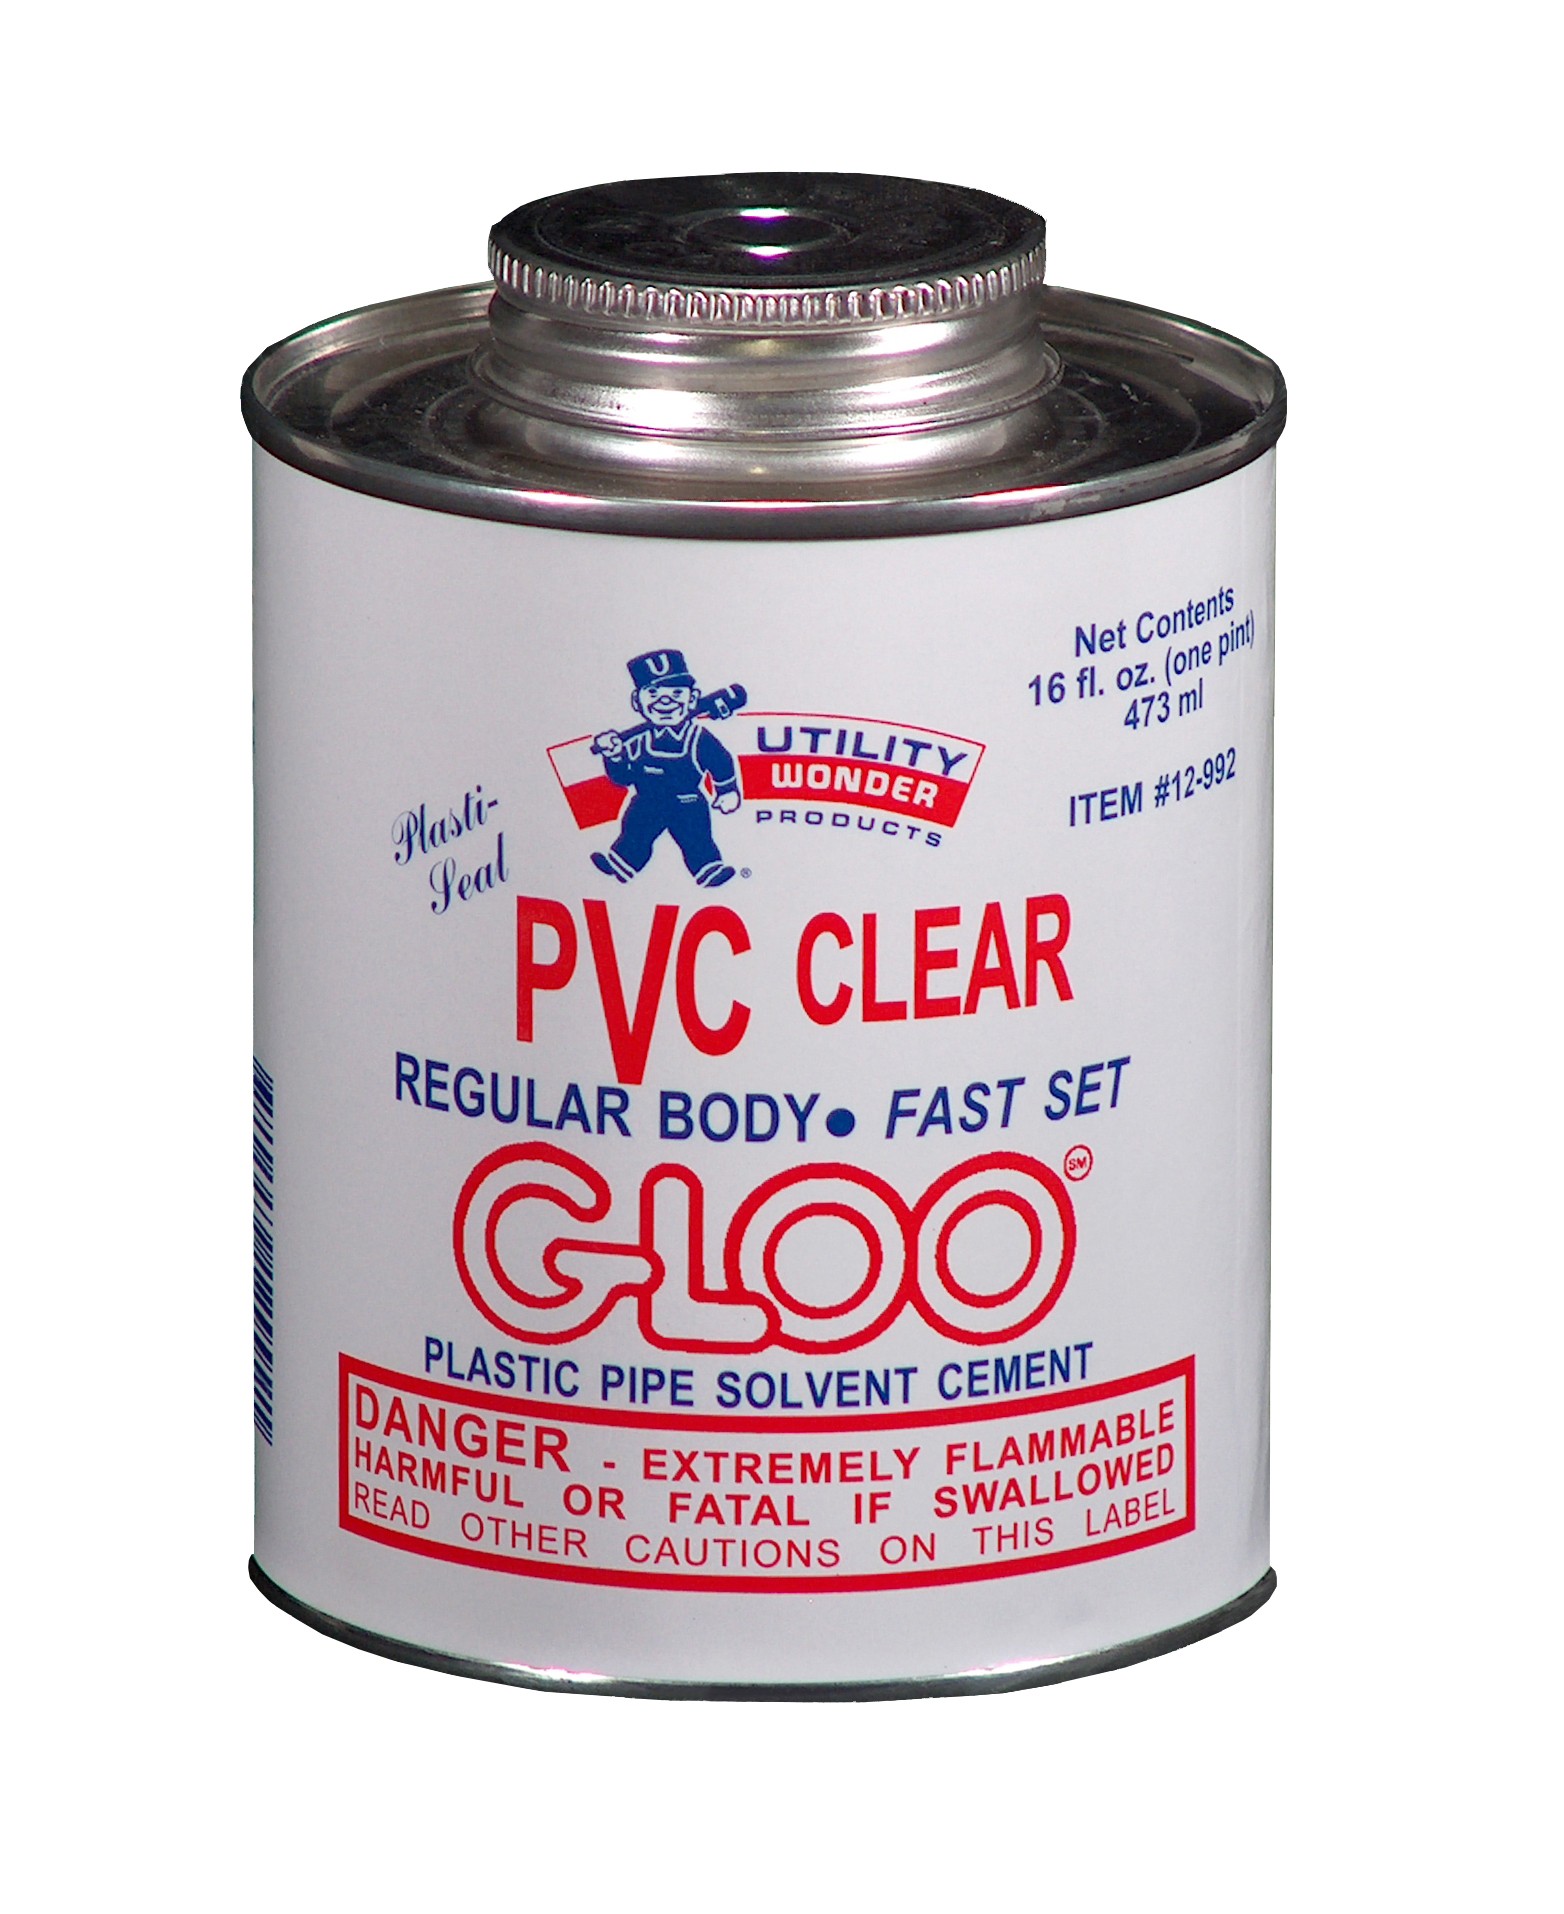 PLASTI-SEAL PVC CLEAR GLOO REGULAR BODY SOLVENT CEMENT